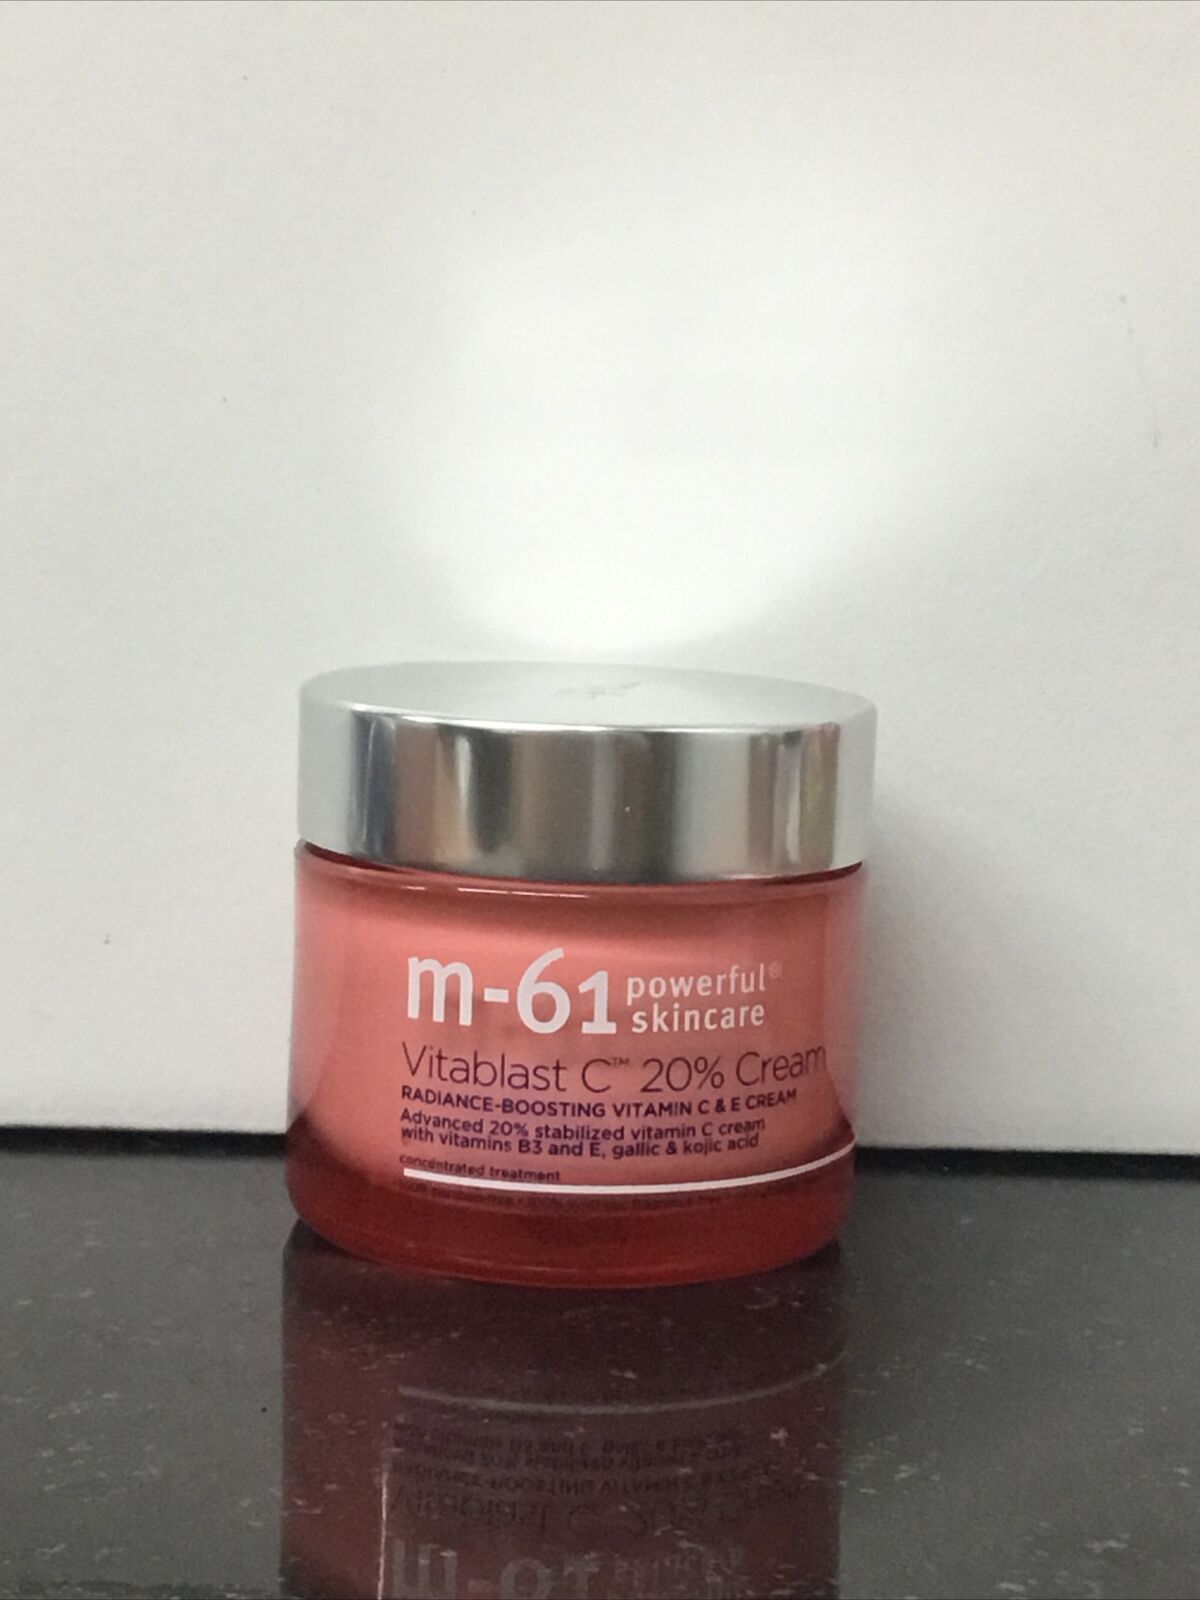 M-61 Powerful Skincare Vitablast C 20% Cream 1.7oz  *NWOB* *As Seen In Image*